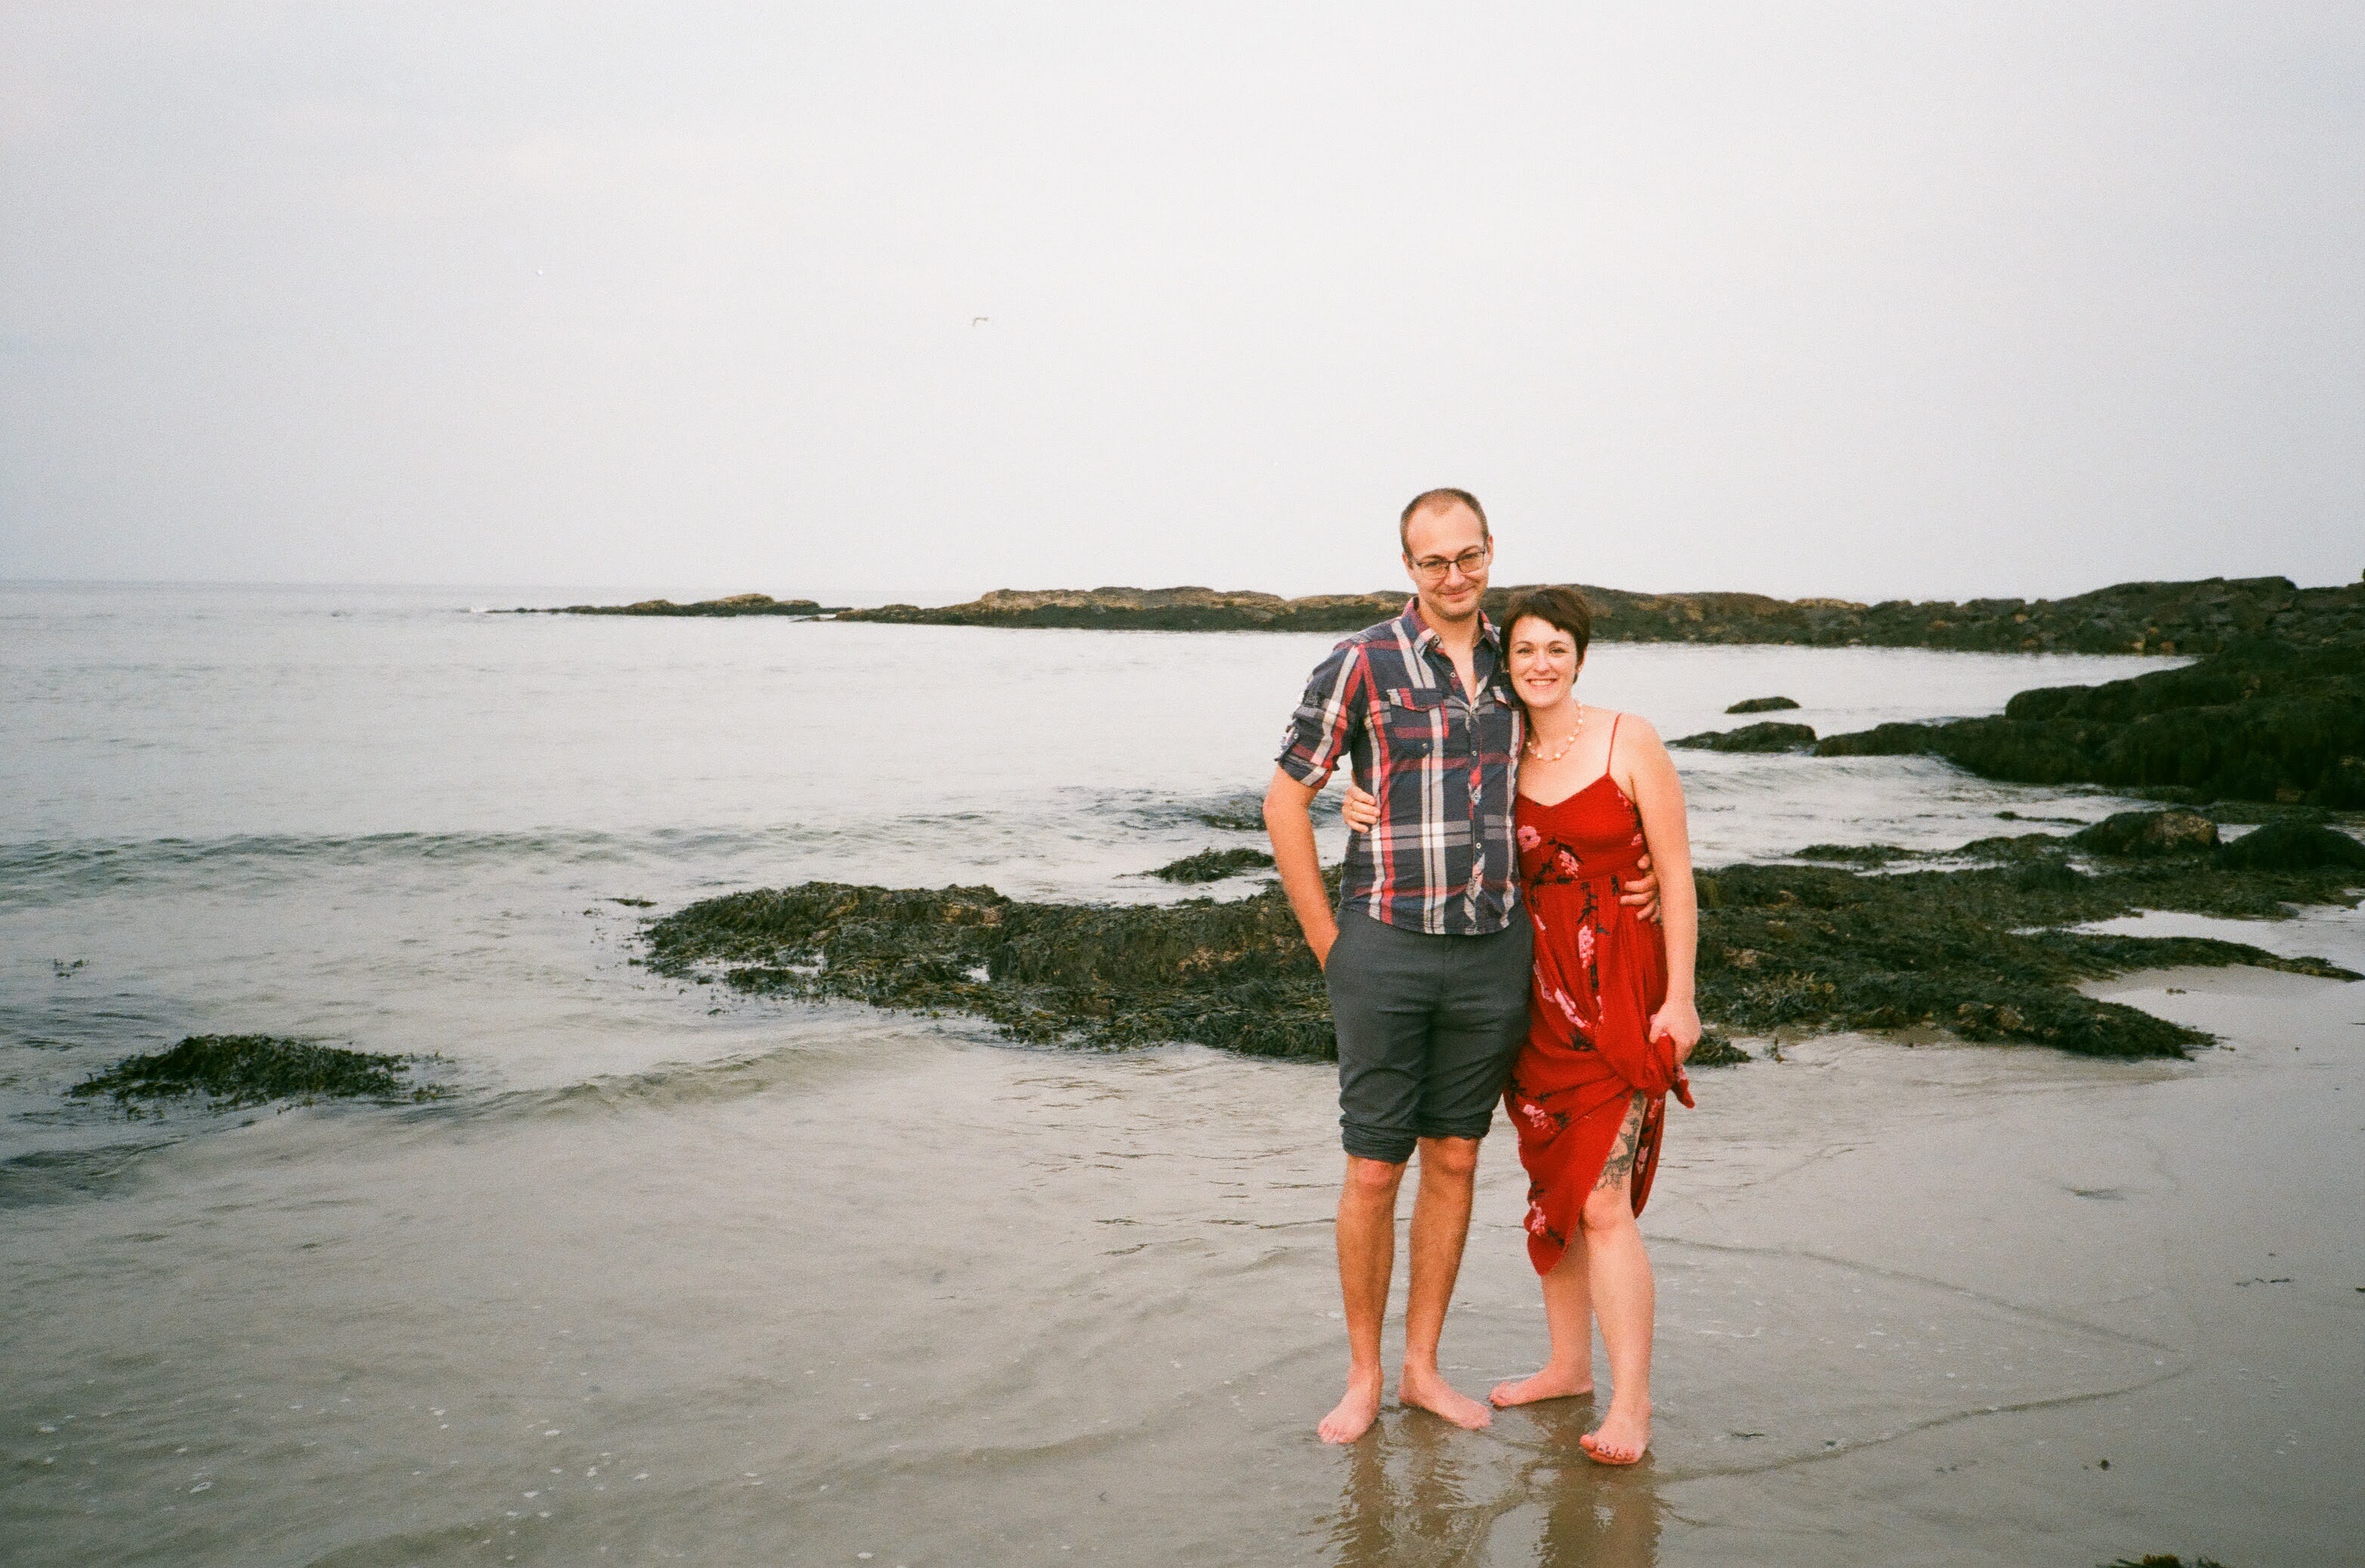 Andrew & Amanda at the beach in Maine